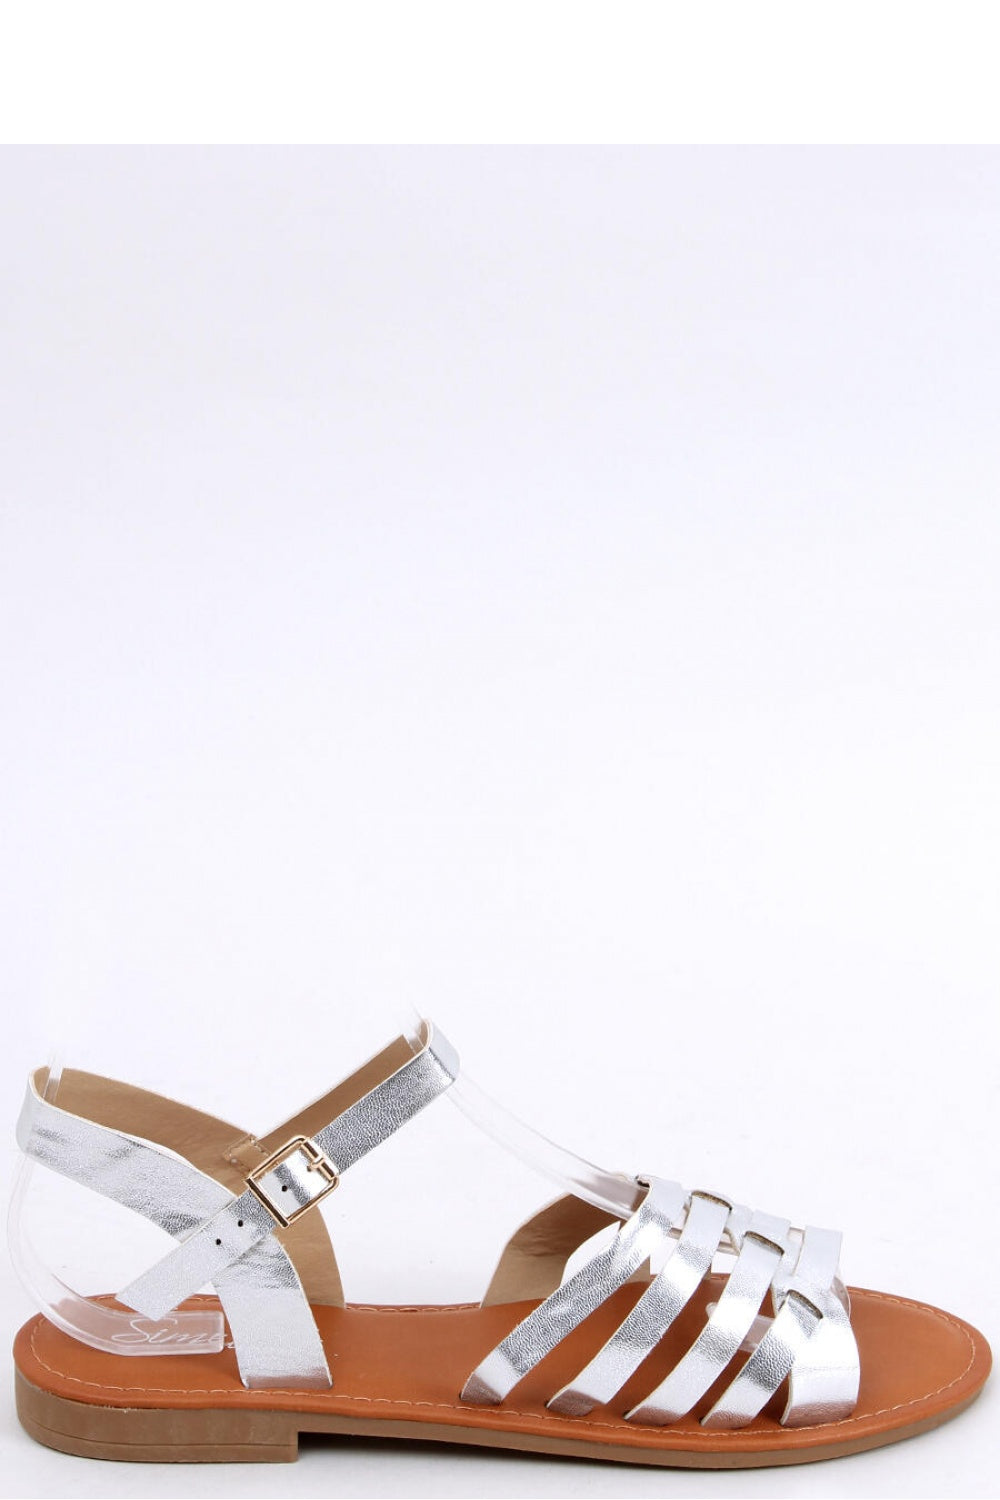 Sandals model 166843 Inello Posh Styles Apparel